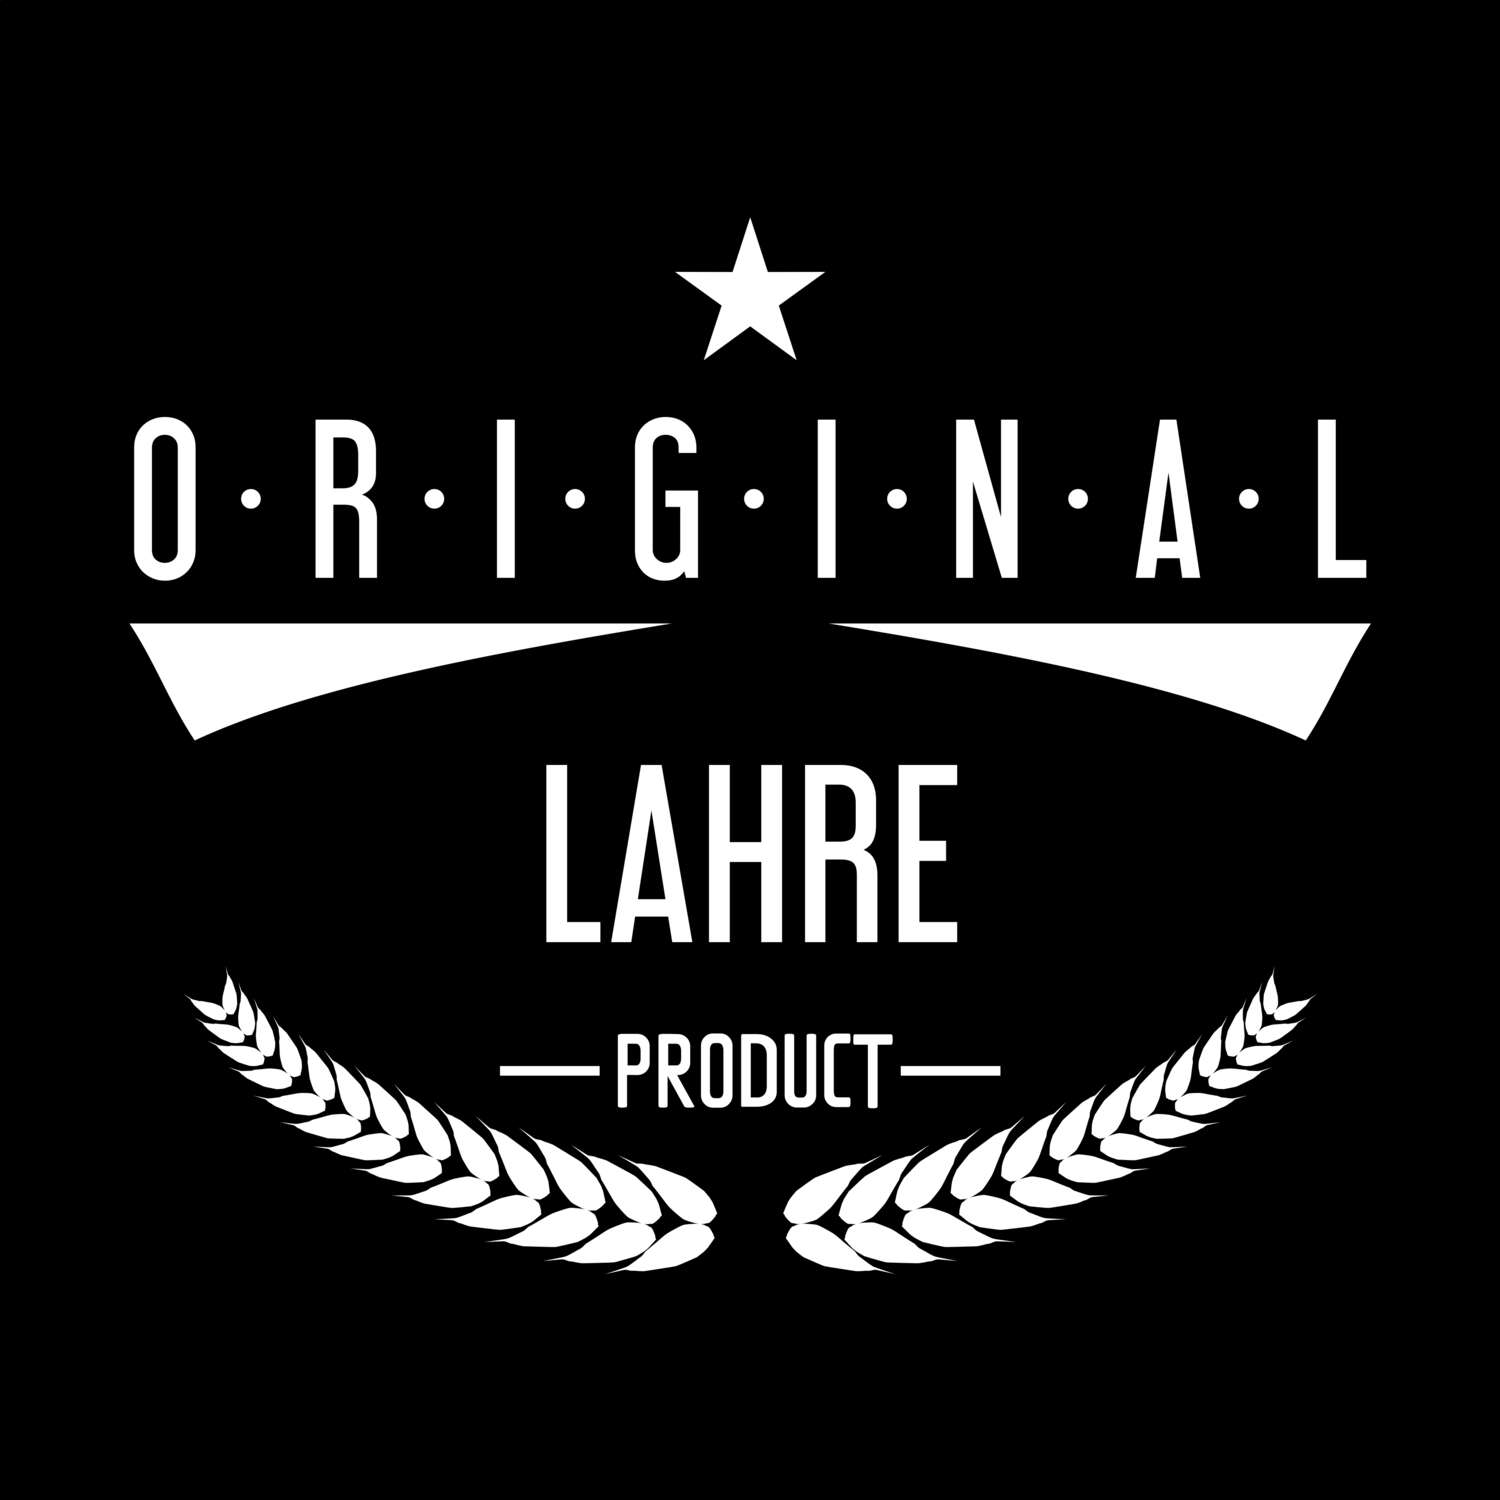 Lahre T-Shirt »Original Product«